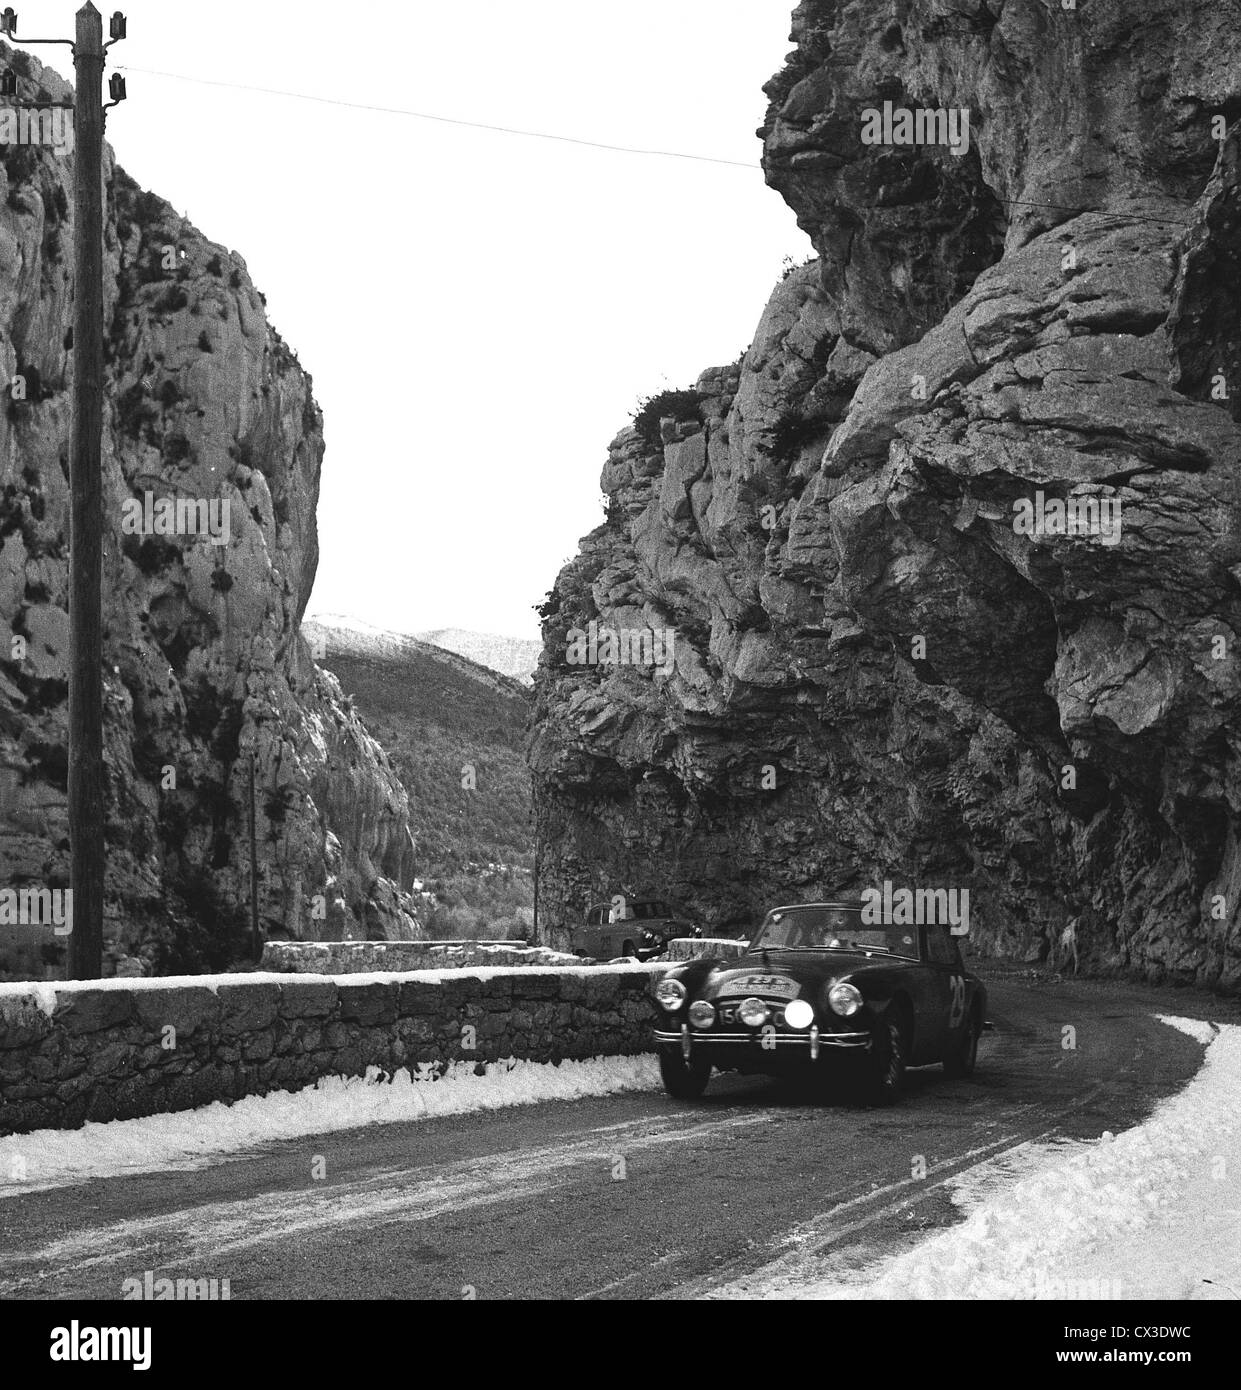 A.C. Aceca pendant le rallye de Monte Carlo 1958 Banque D'Images